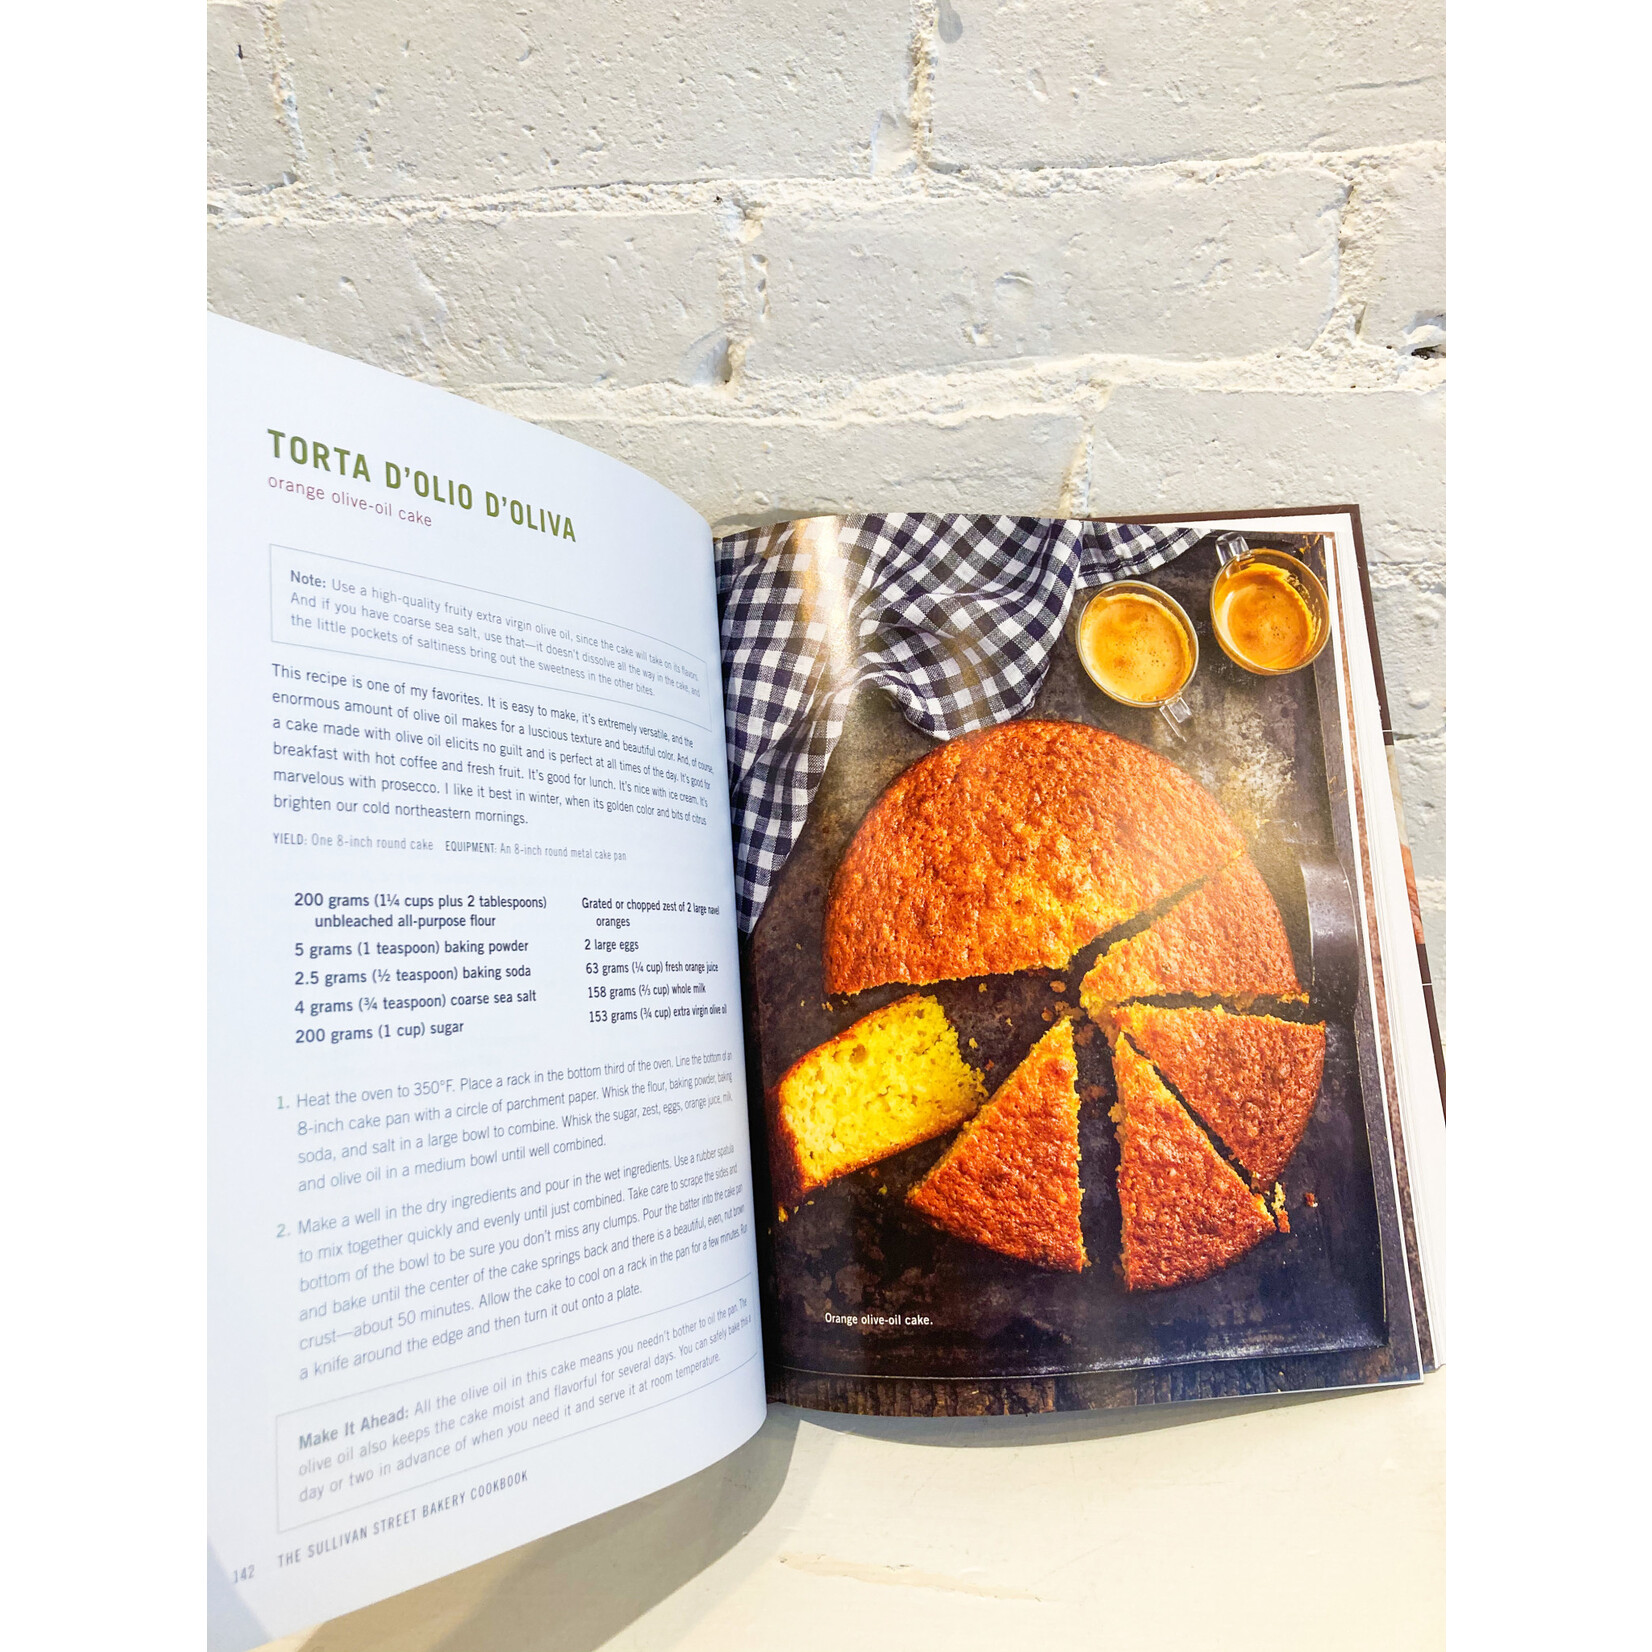 The Sullivan Street Bakery Cookbook by Jim Lahey